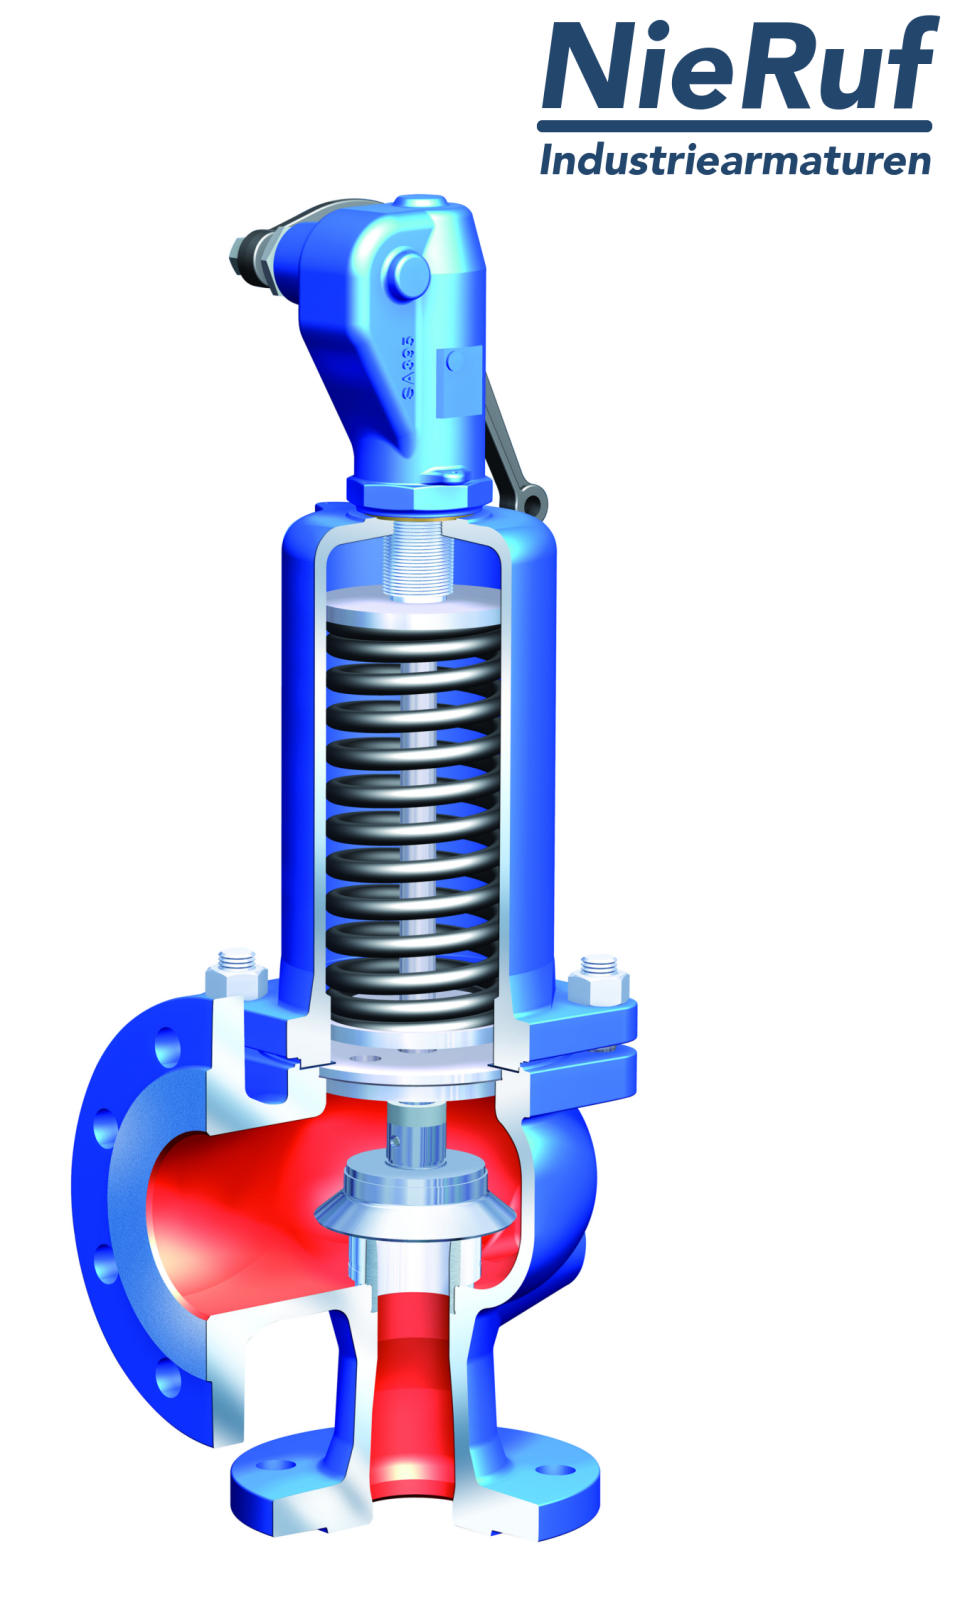 flange-safety valve DN15/DN15 SF02, cast steel 1.0619+N FPM, with lever